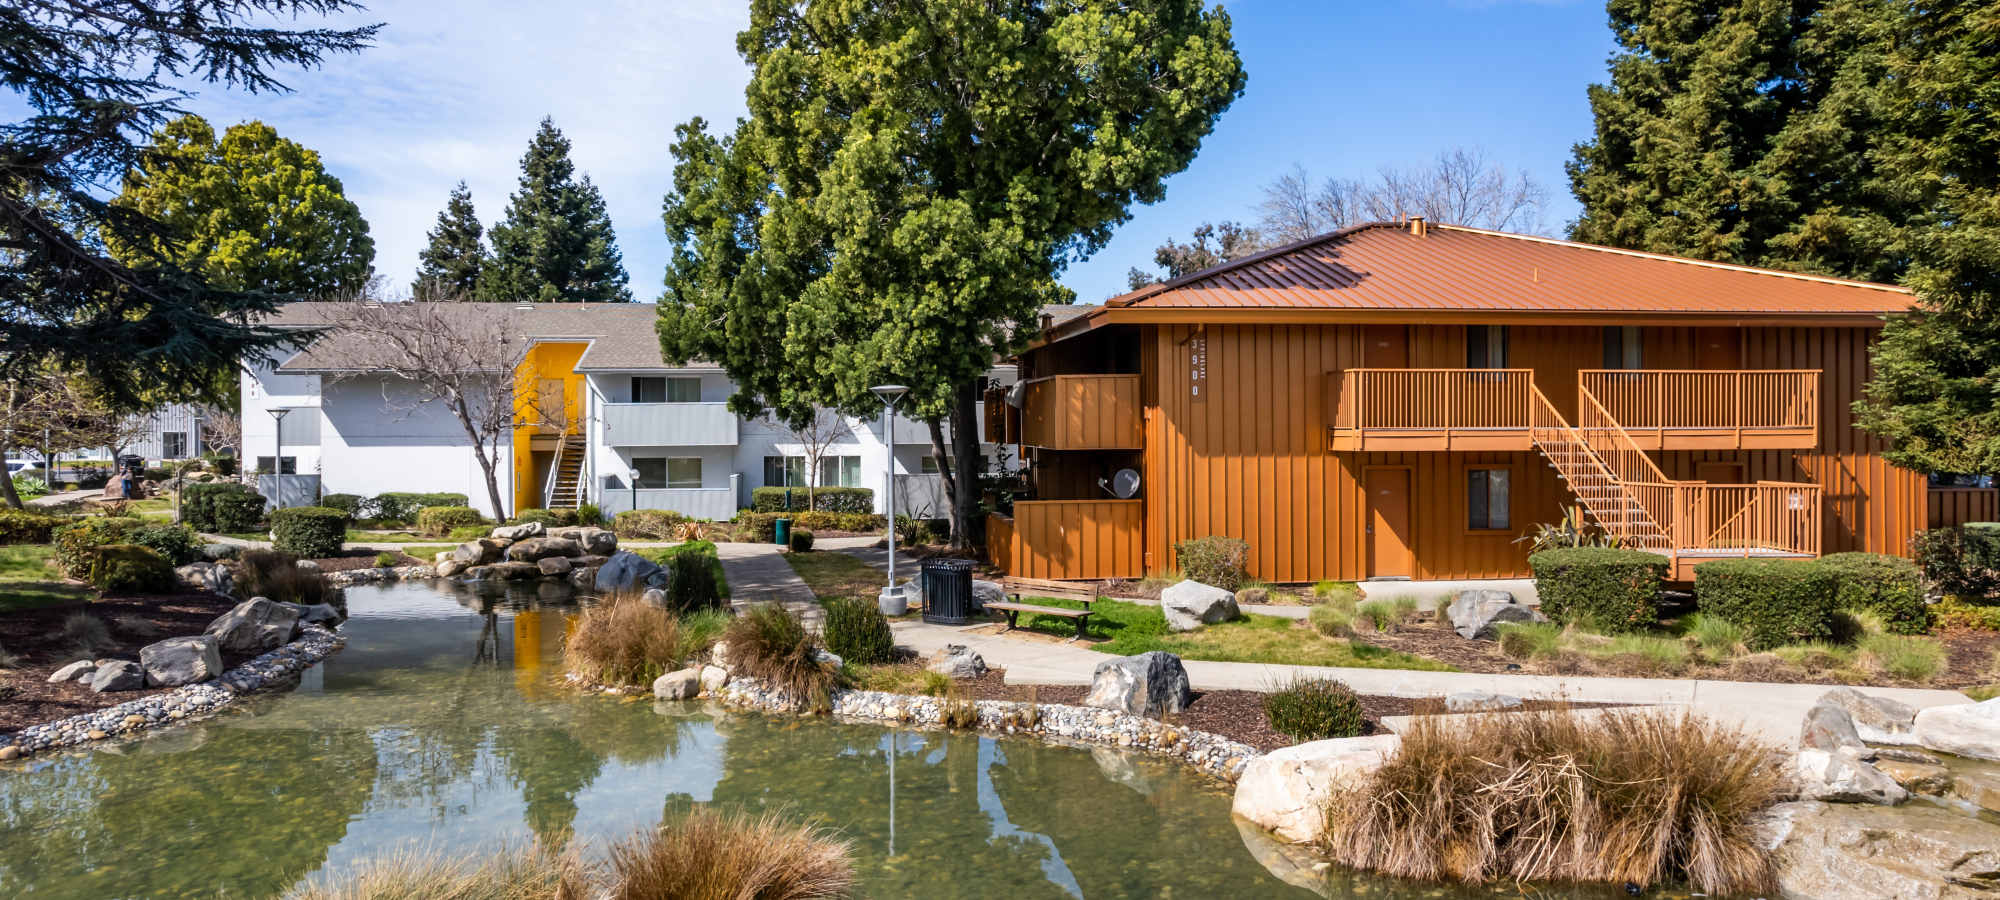 Lakeside Village in San Leandro, California